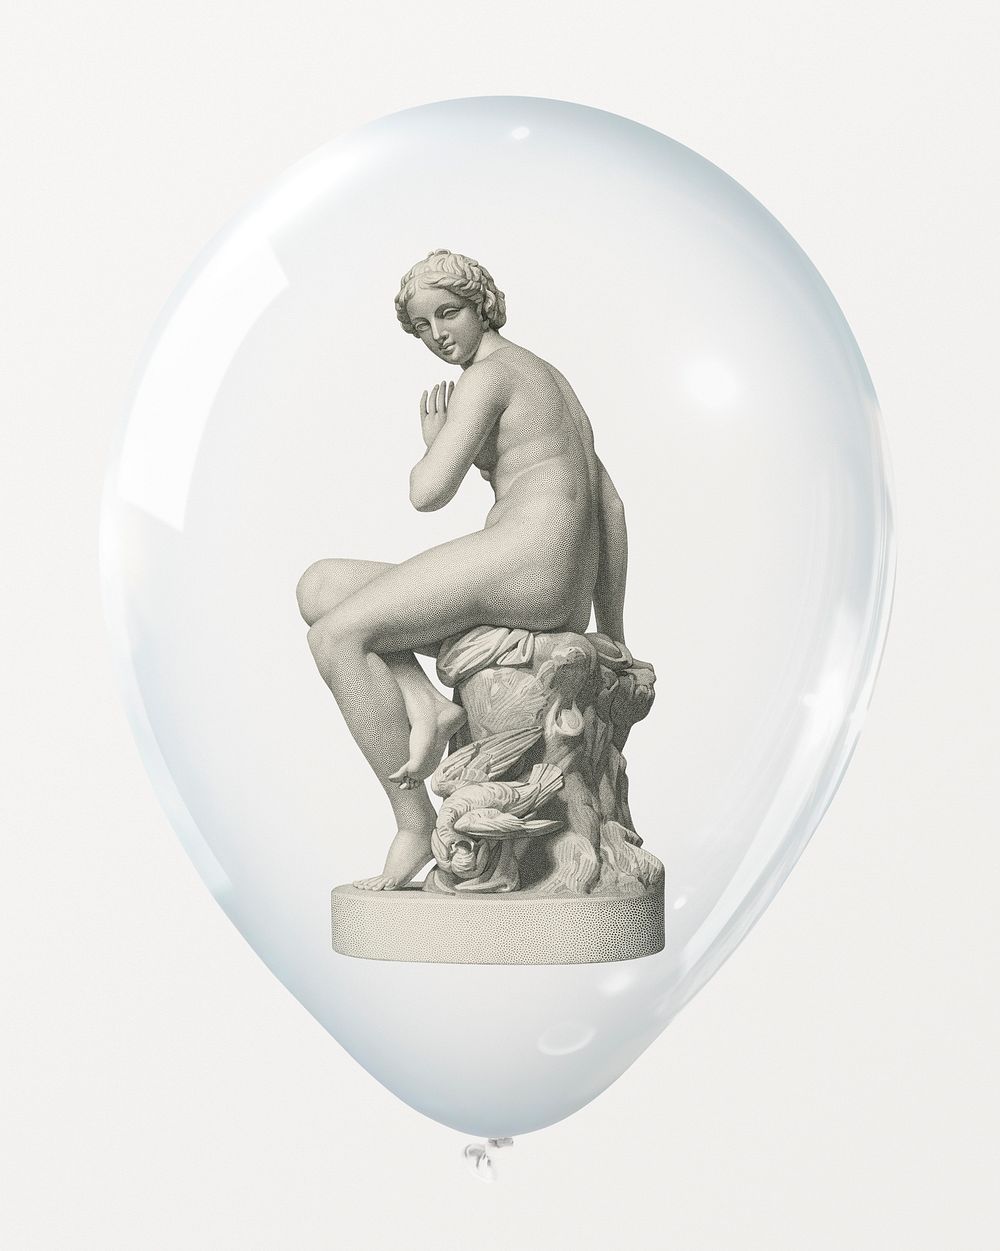 Greek goddess statue in clear balloon